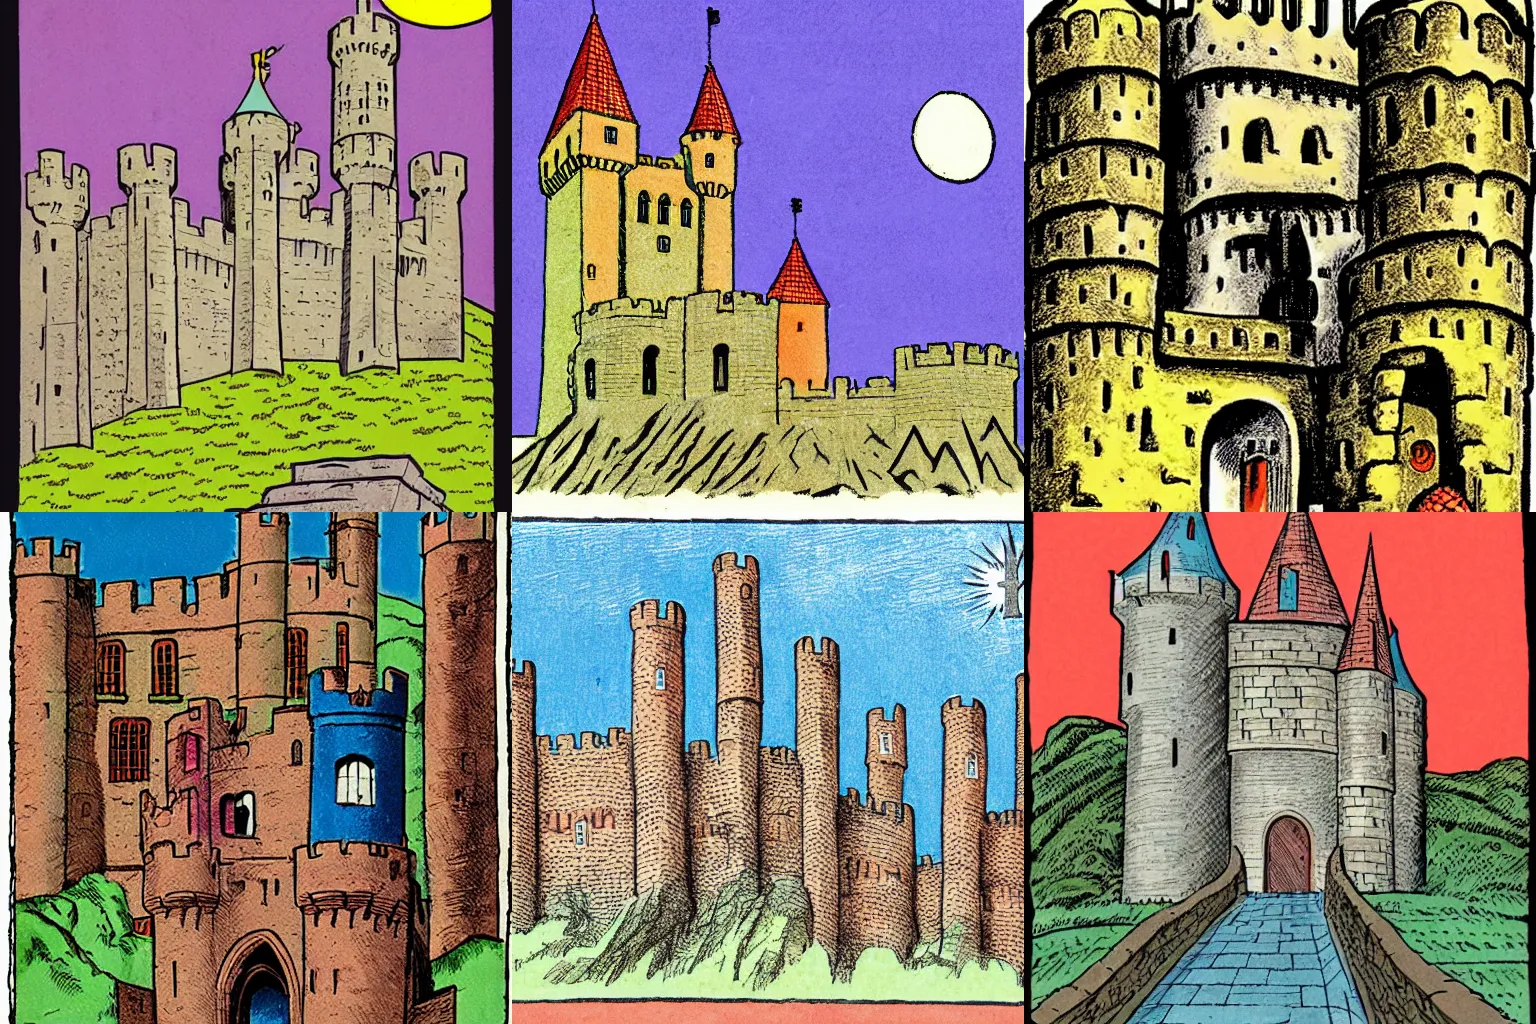 Prompt: medieval castle, colored, by Steve Ditko